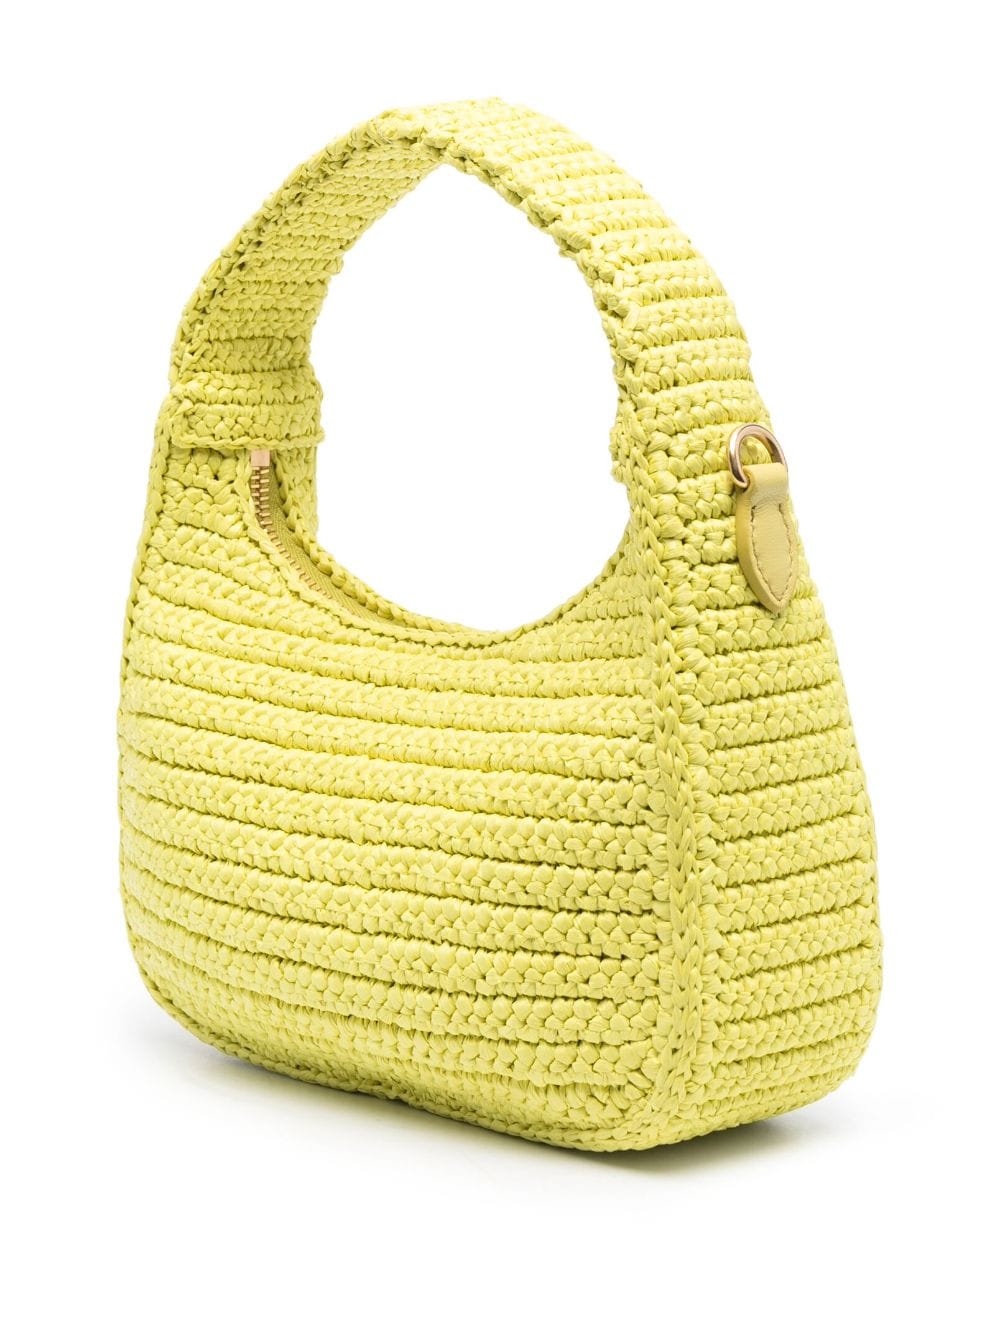 Crocheted yellow handbag Designer shoulder bag Mustard bag with